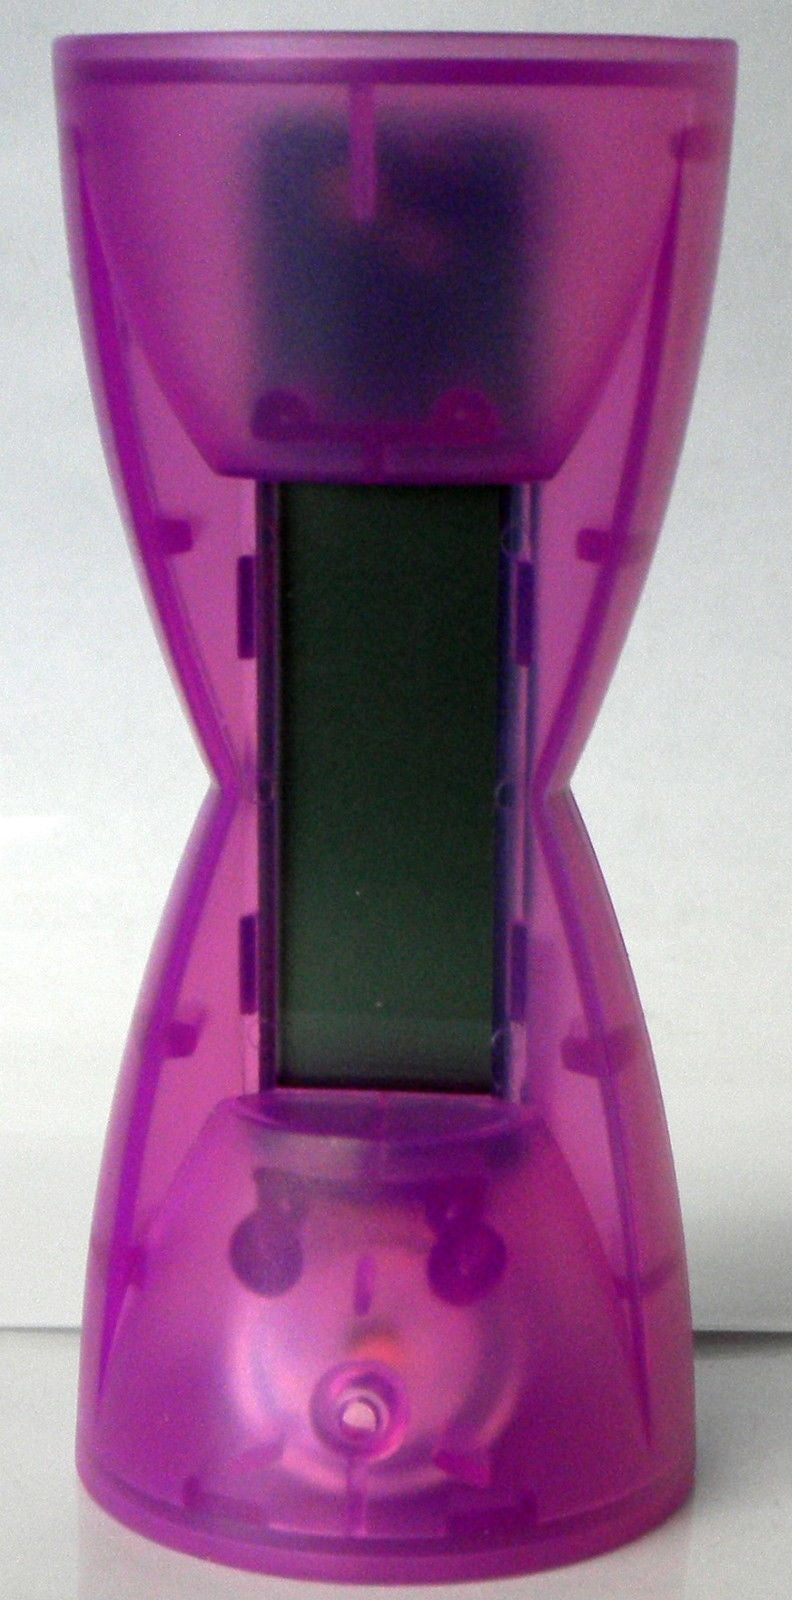 iBottle SB1101 Digital Sand Hourglass Timer & Clock 1 Sec-99 Min (1pc)